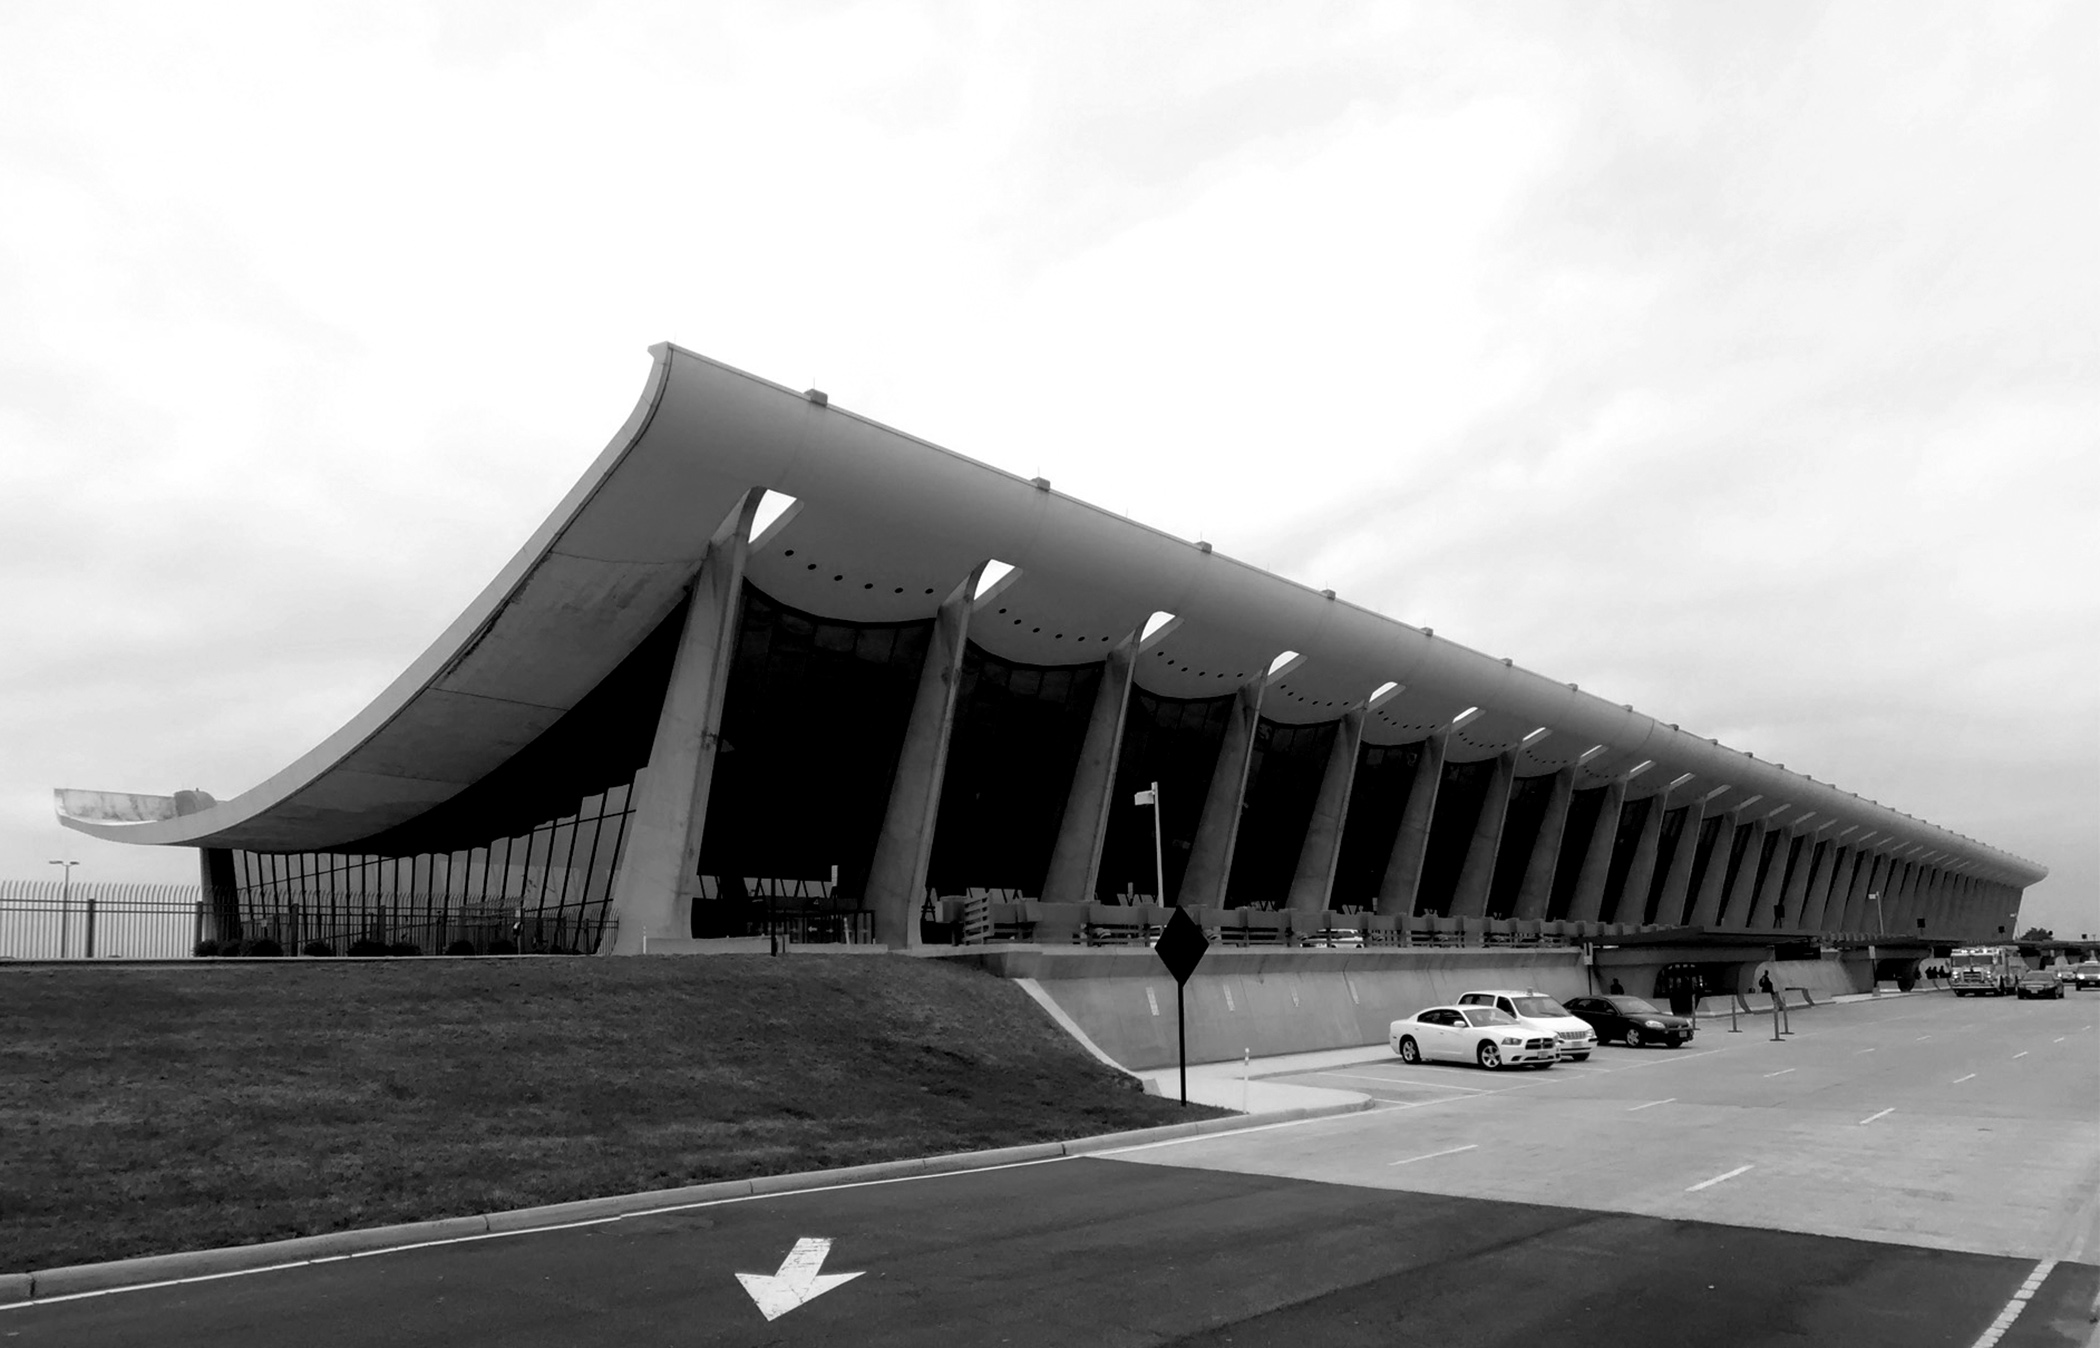 Image of TWA terminal building.